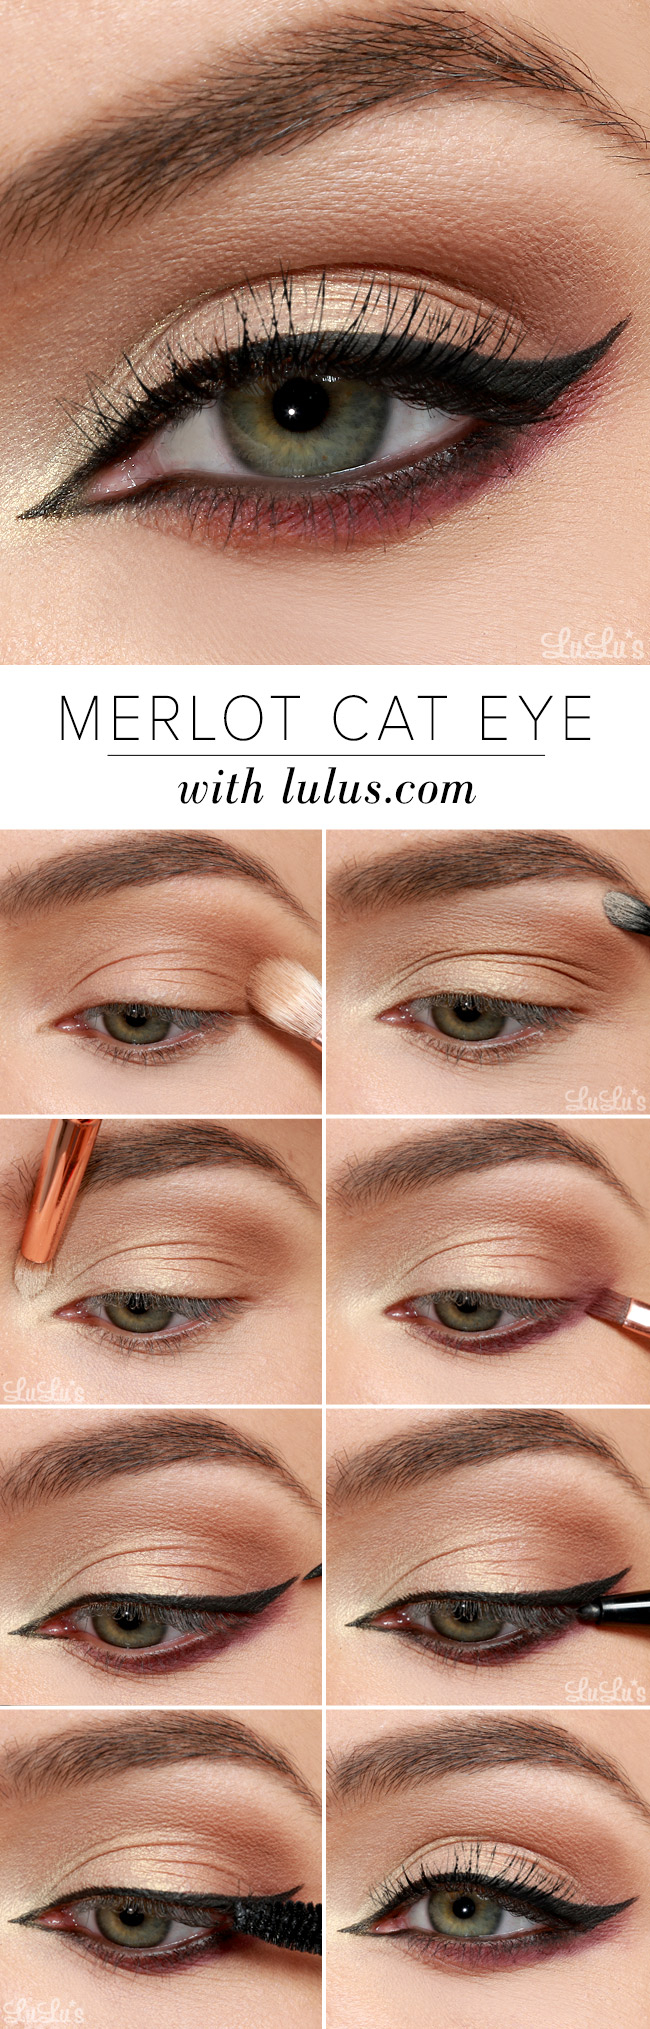 Cat Eye Makeup Halloween Lulus How To Merlot Cat Eye Makeup Tutorial Lulus Fashion Blog